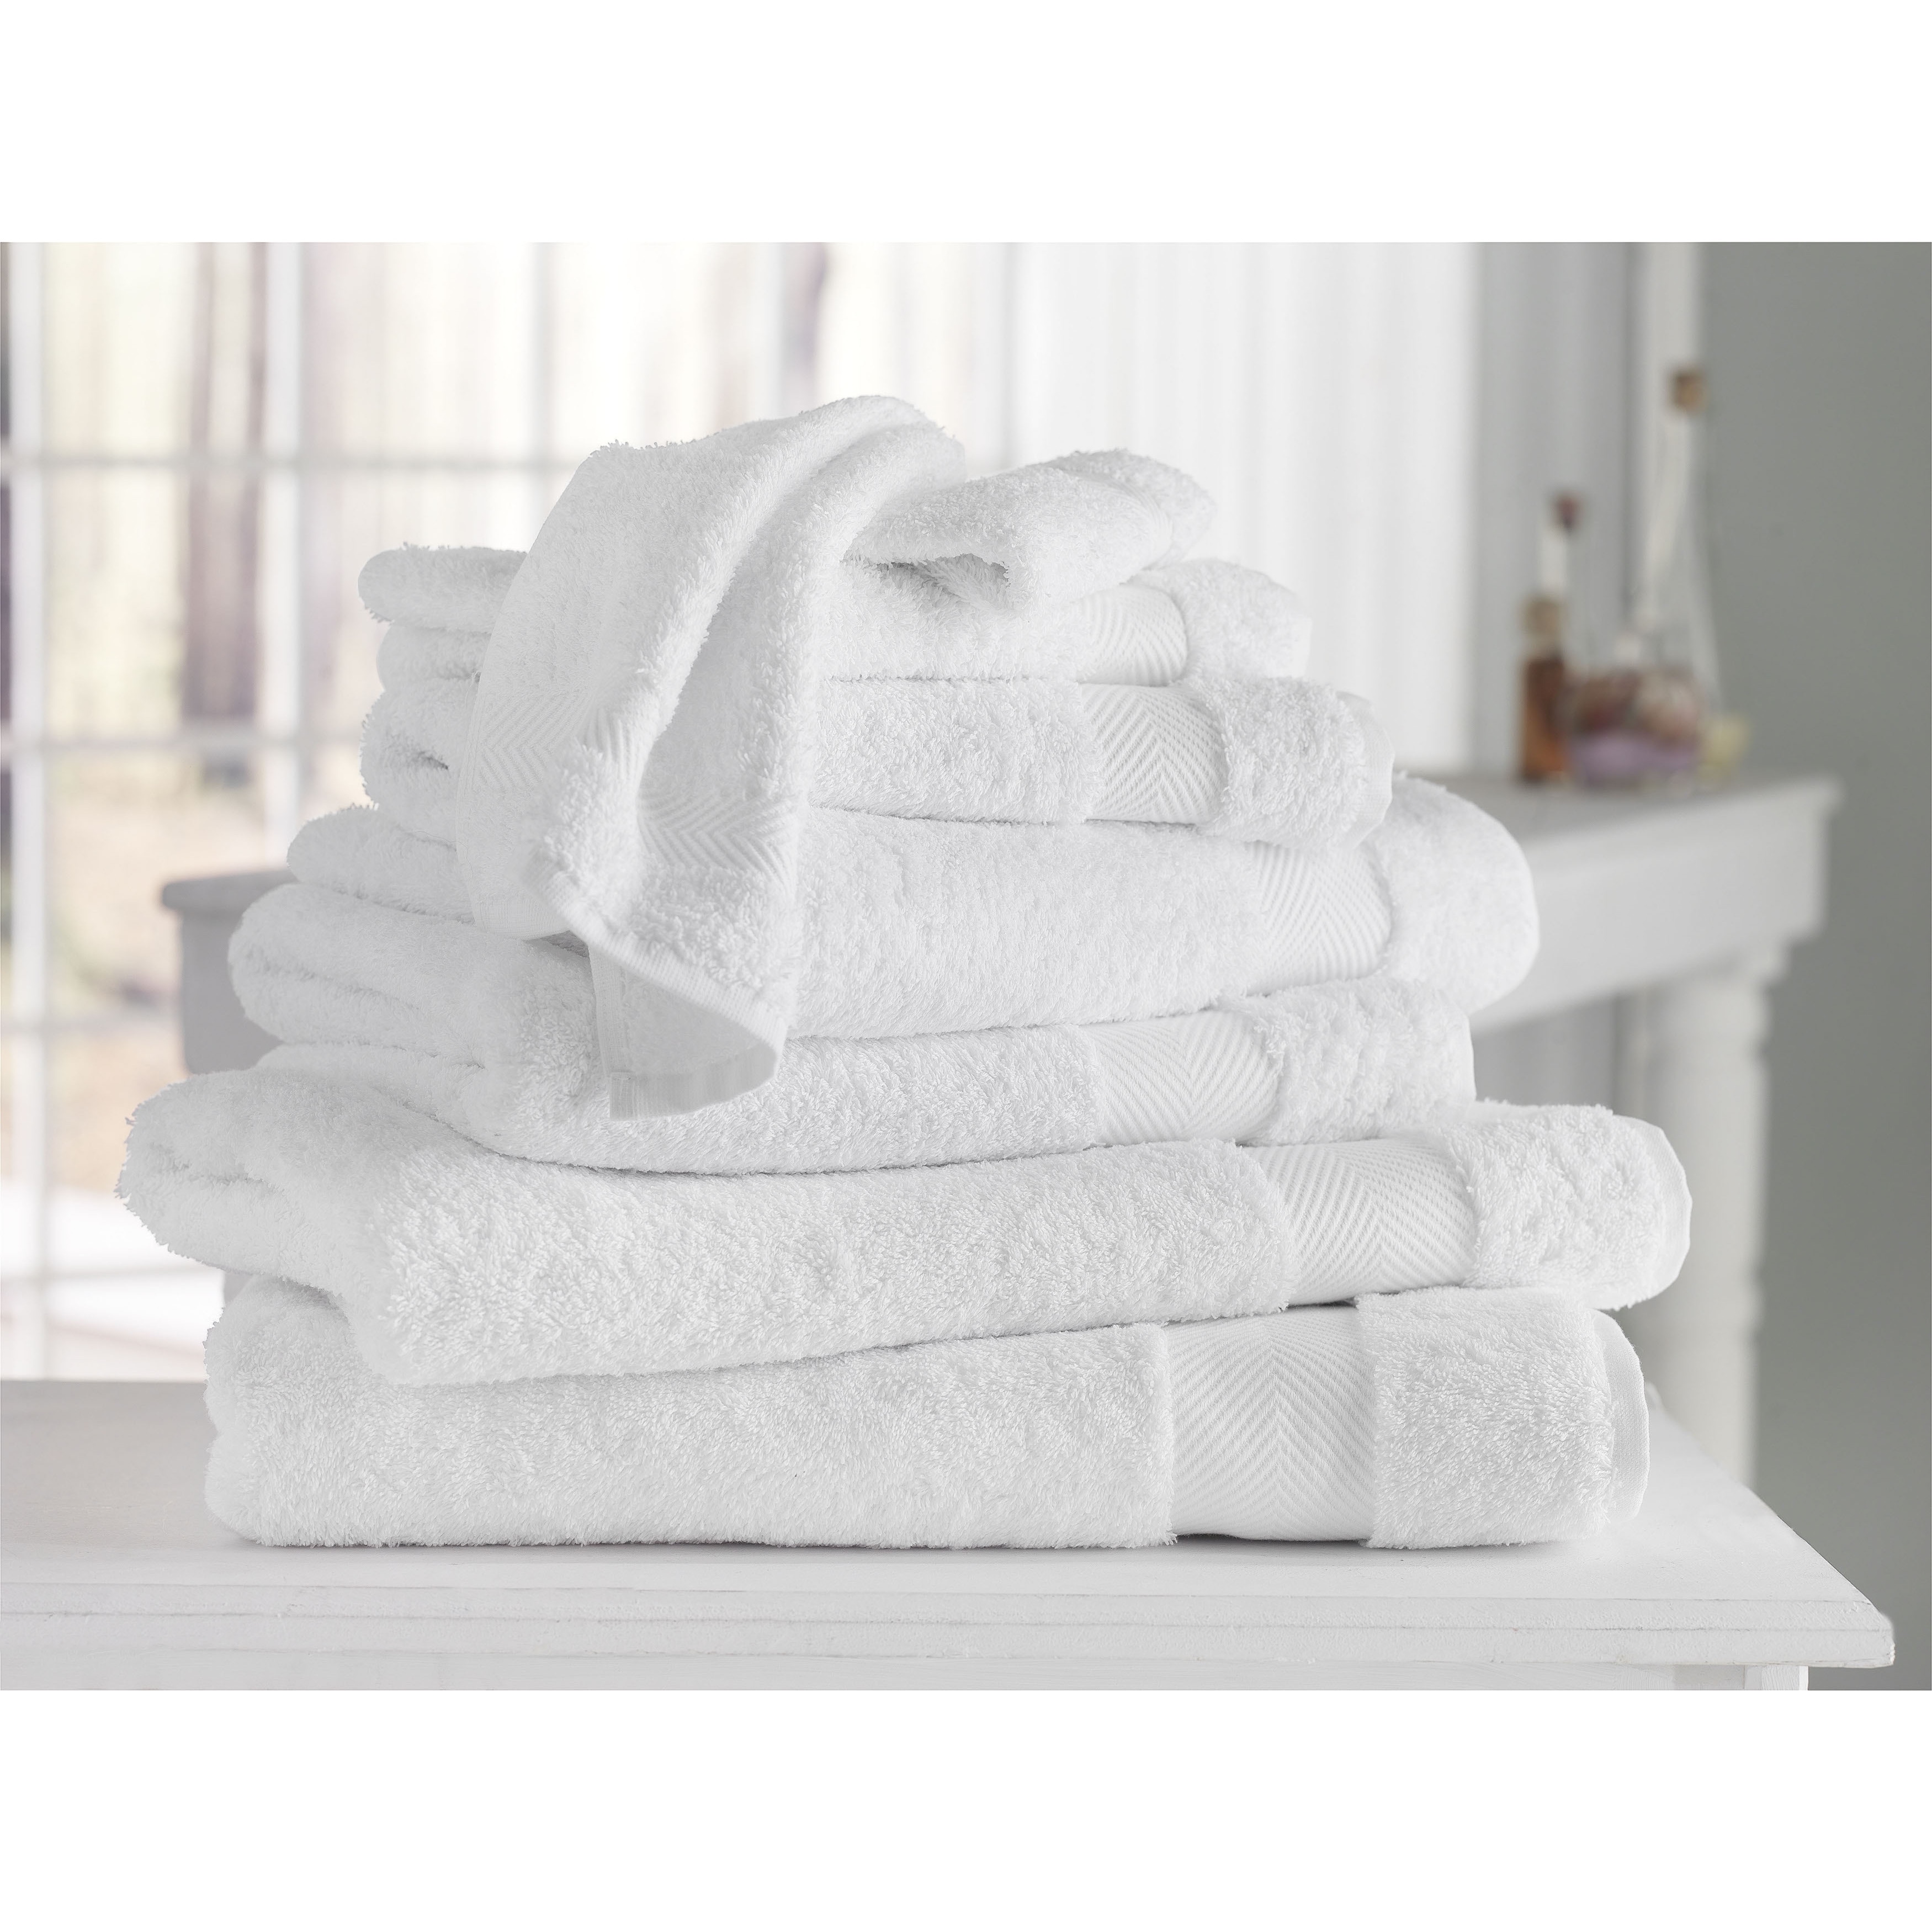 10 new white 100% cotton hotel wash cloths 12x12  washcloths buy 4 get 1 free** 